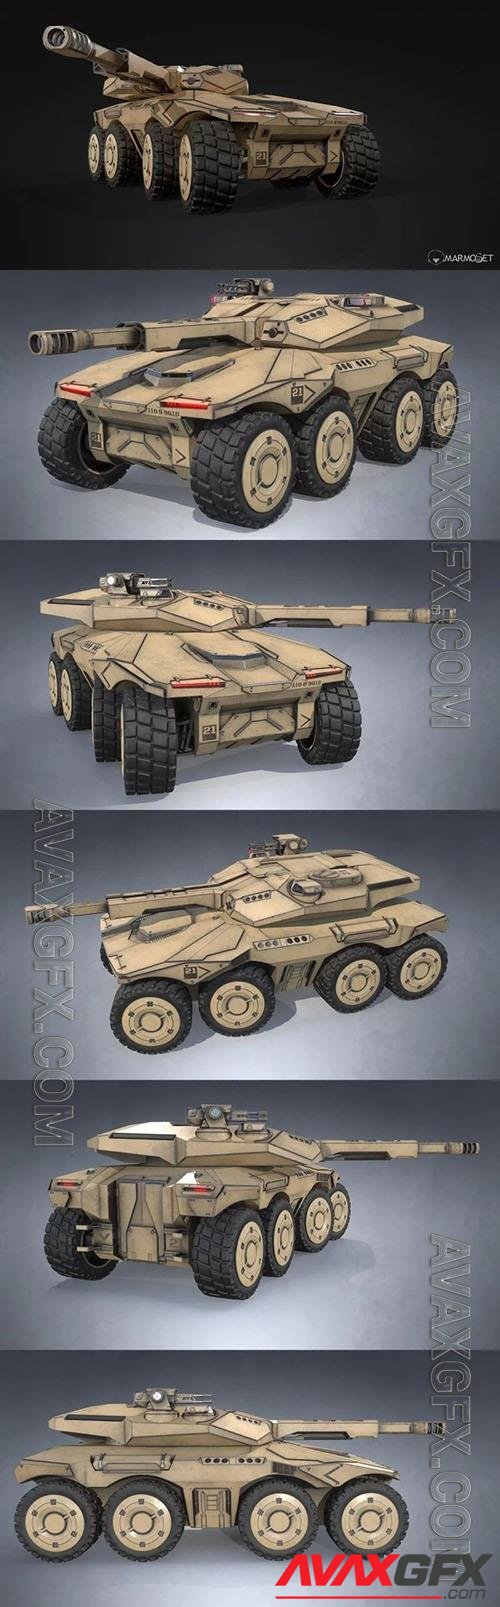 Sci-fi APC Desert version tank - 3d model